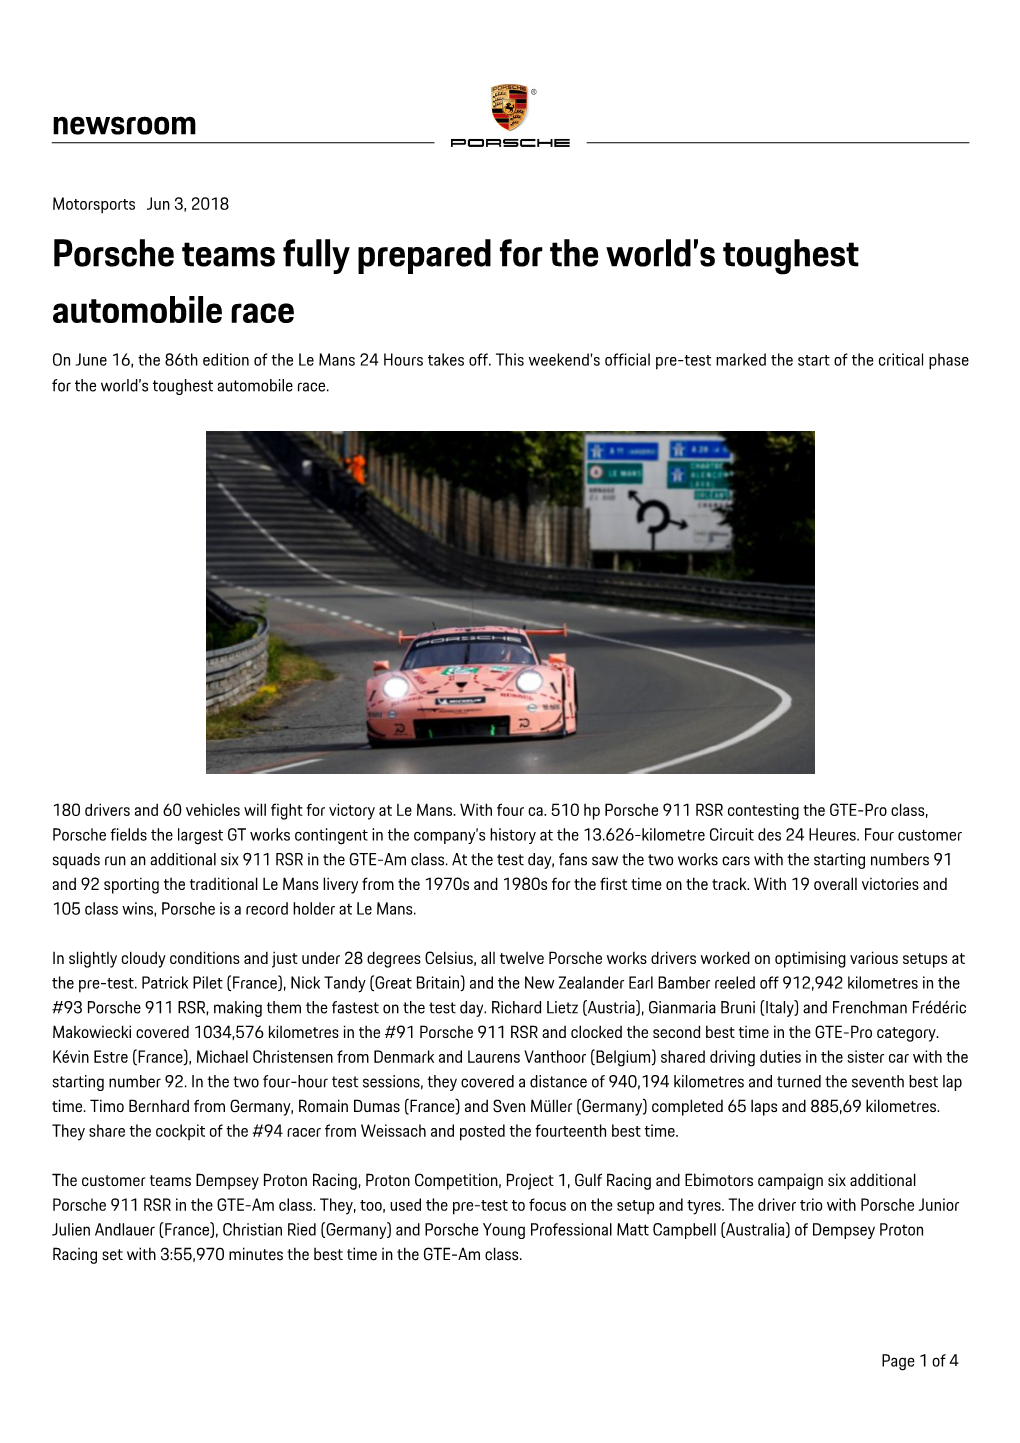 Porsche Teams Fully Prepared for the World's Toughest Automobile Race